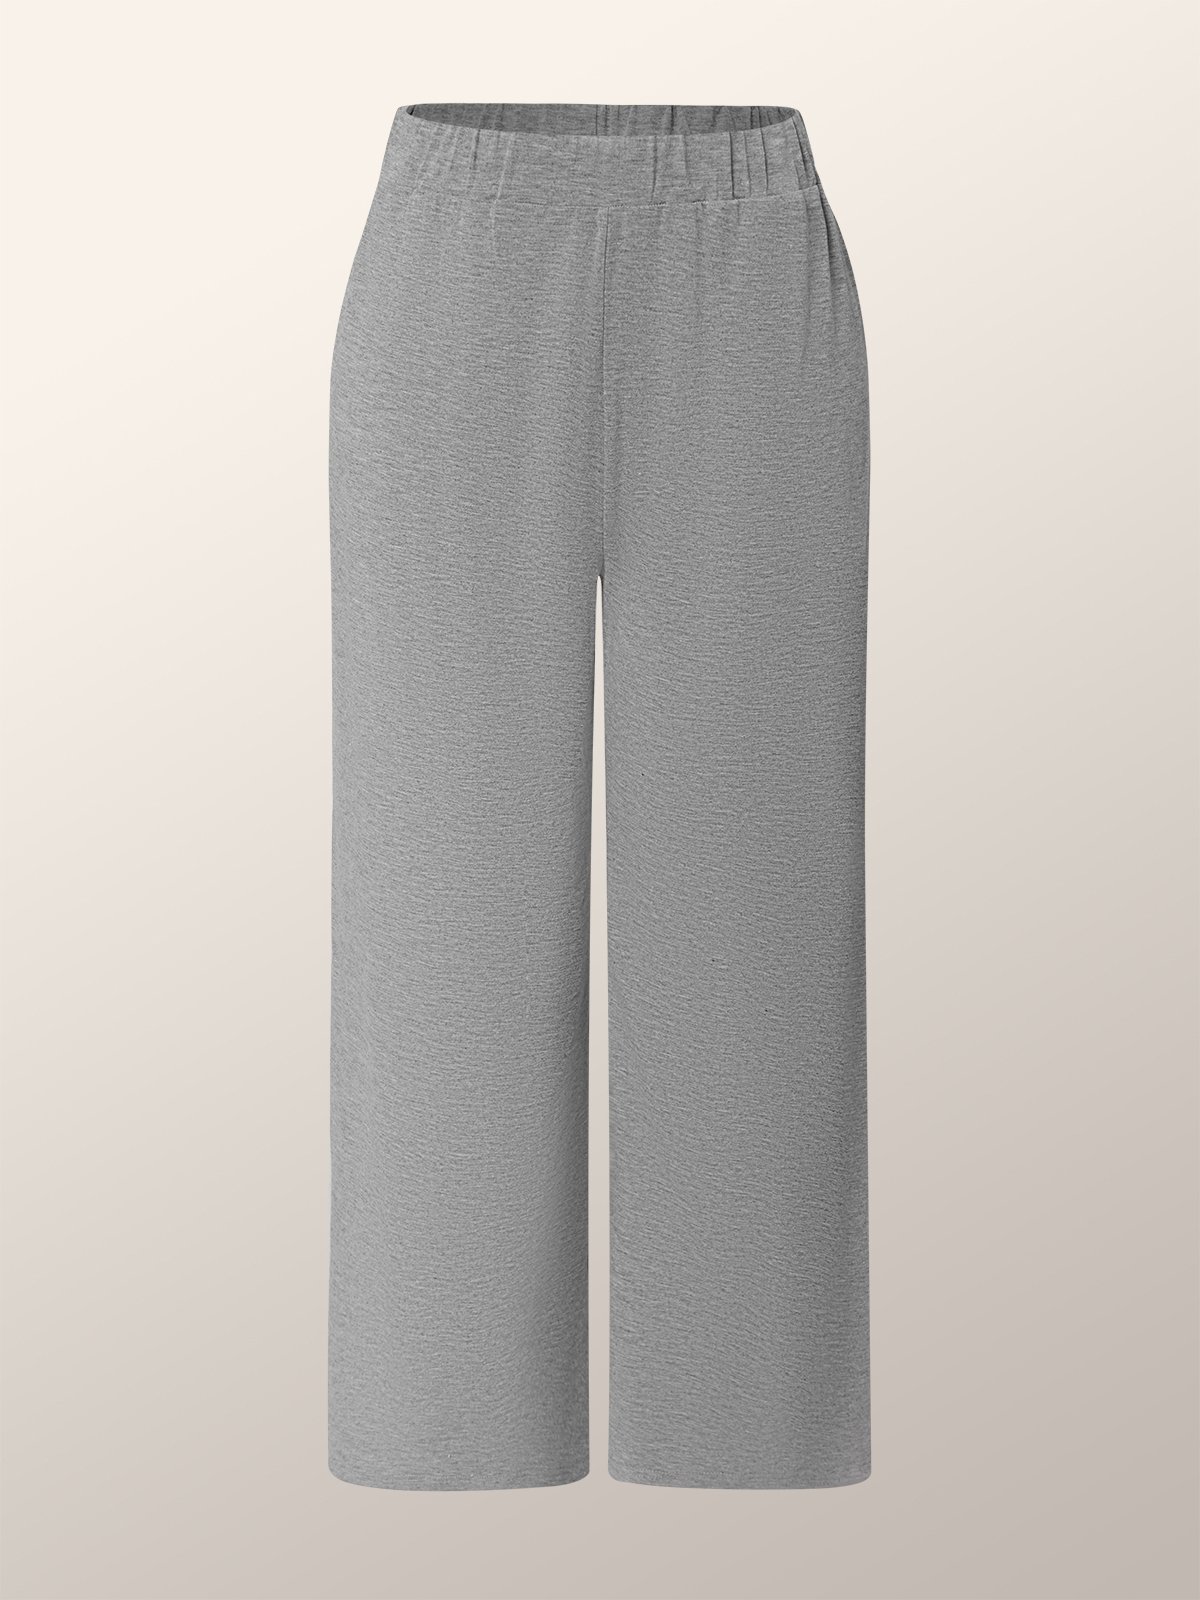 Mode Pantalons Femmes Plain Toutes Les Saisons Urbain Polyester Naturel Ample Pantalons à Jambe Large Long Trapèze